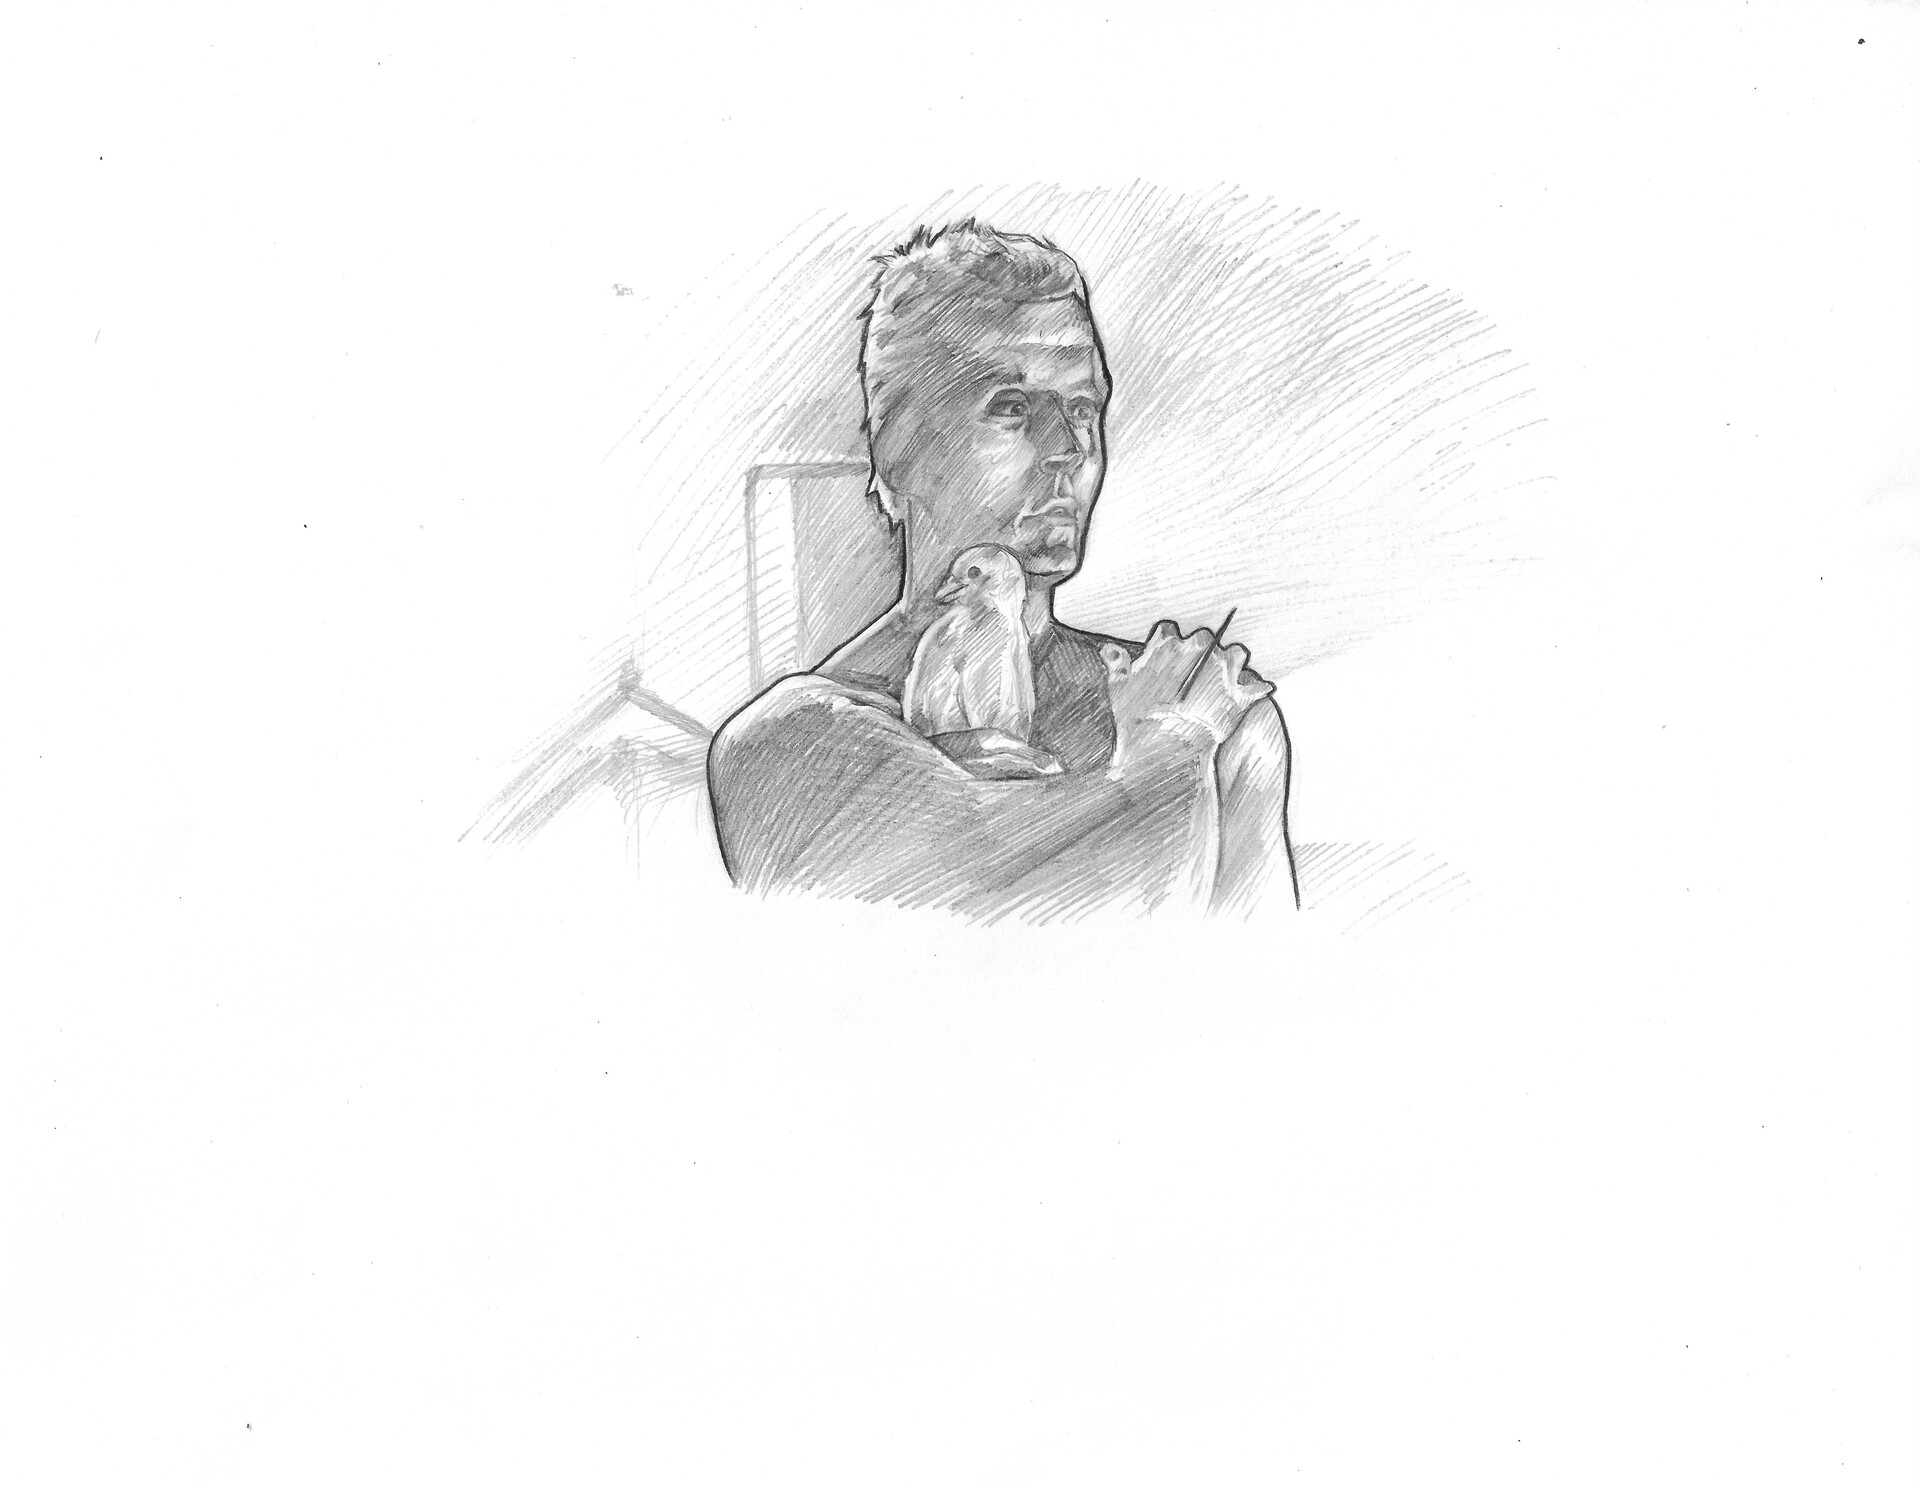 A sanguine Conte crayon study I did of Deckard years back. : r/bladerunner